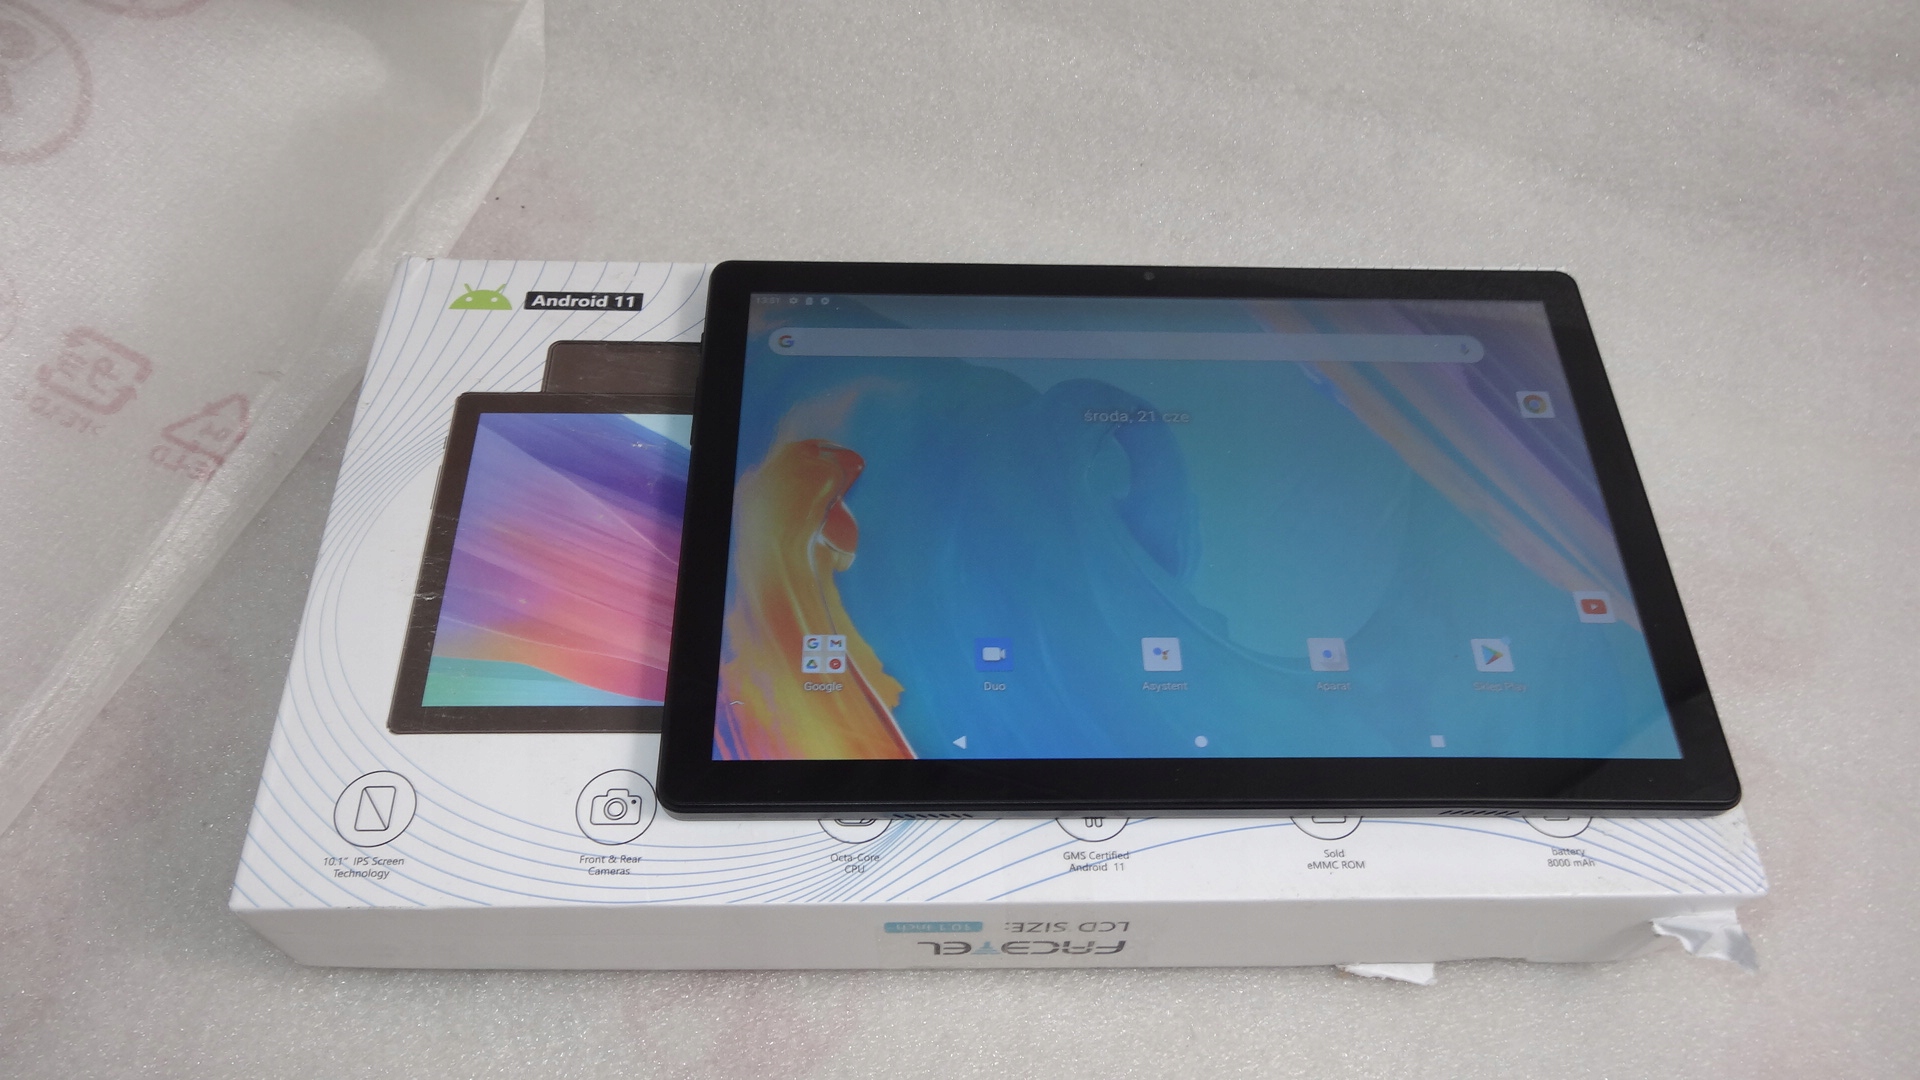 Global Version Facetel Q10 Tablet 10 Inch Octa Core 4+64GB 8000